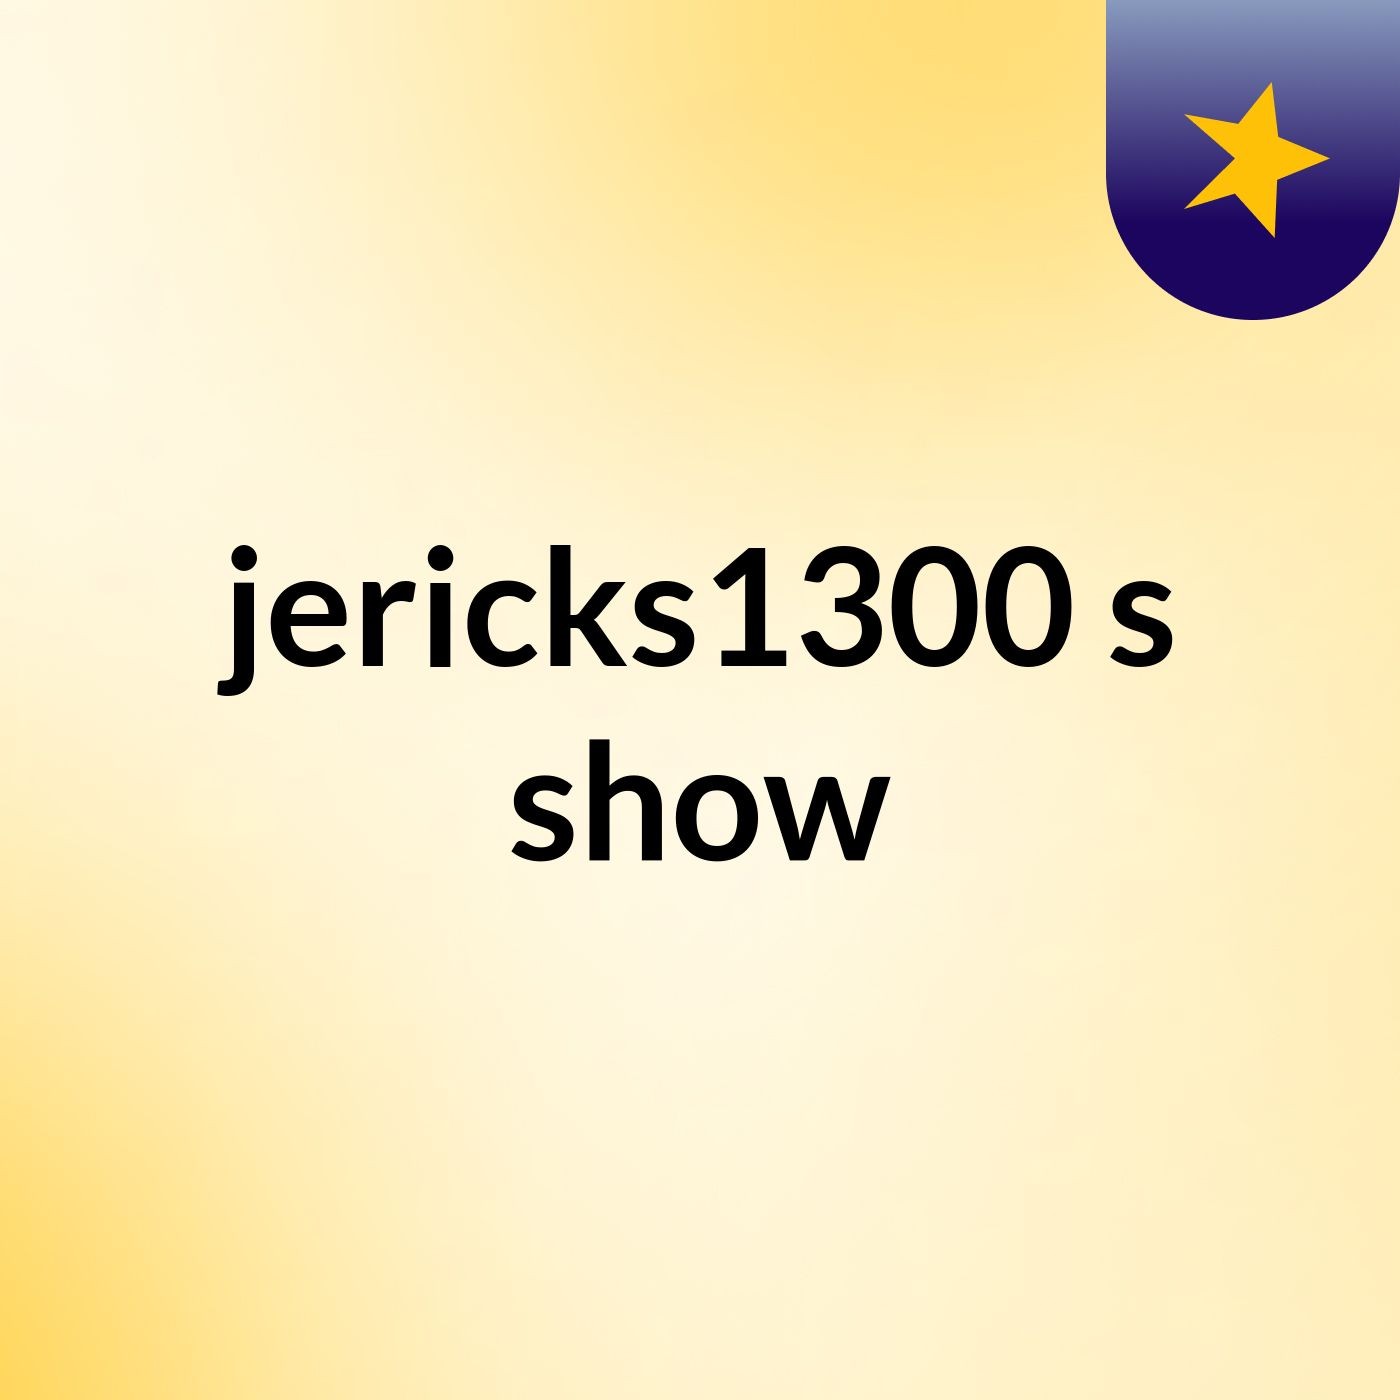 jericks1300's show